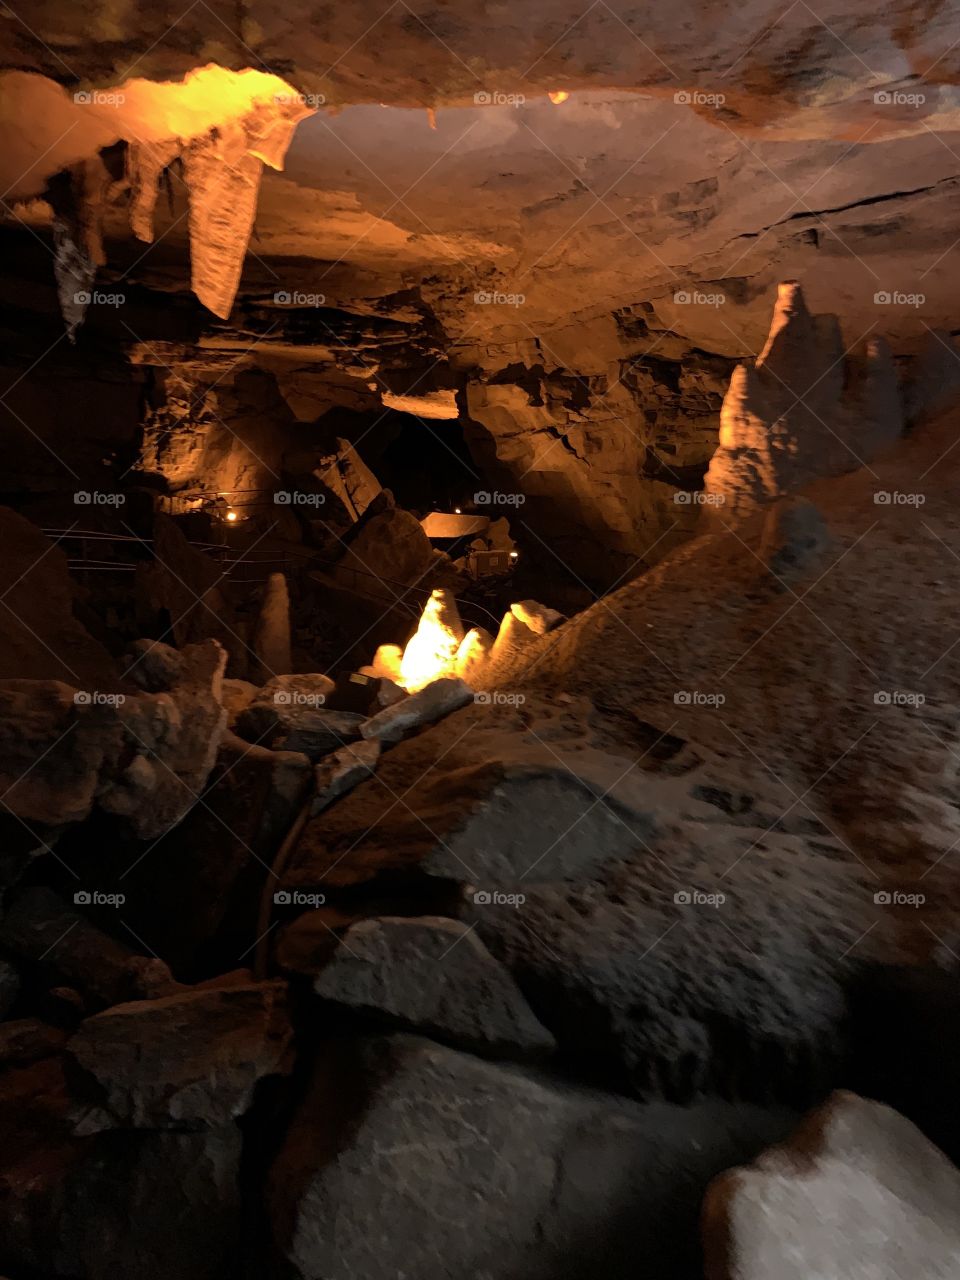 Gorgeous sandstone cavern formation